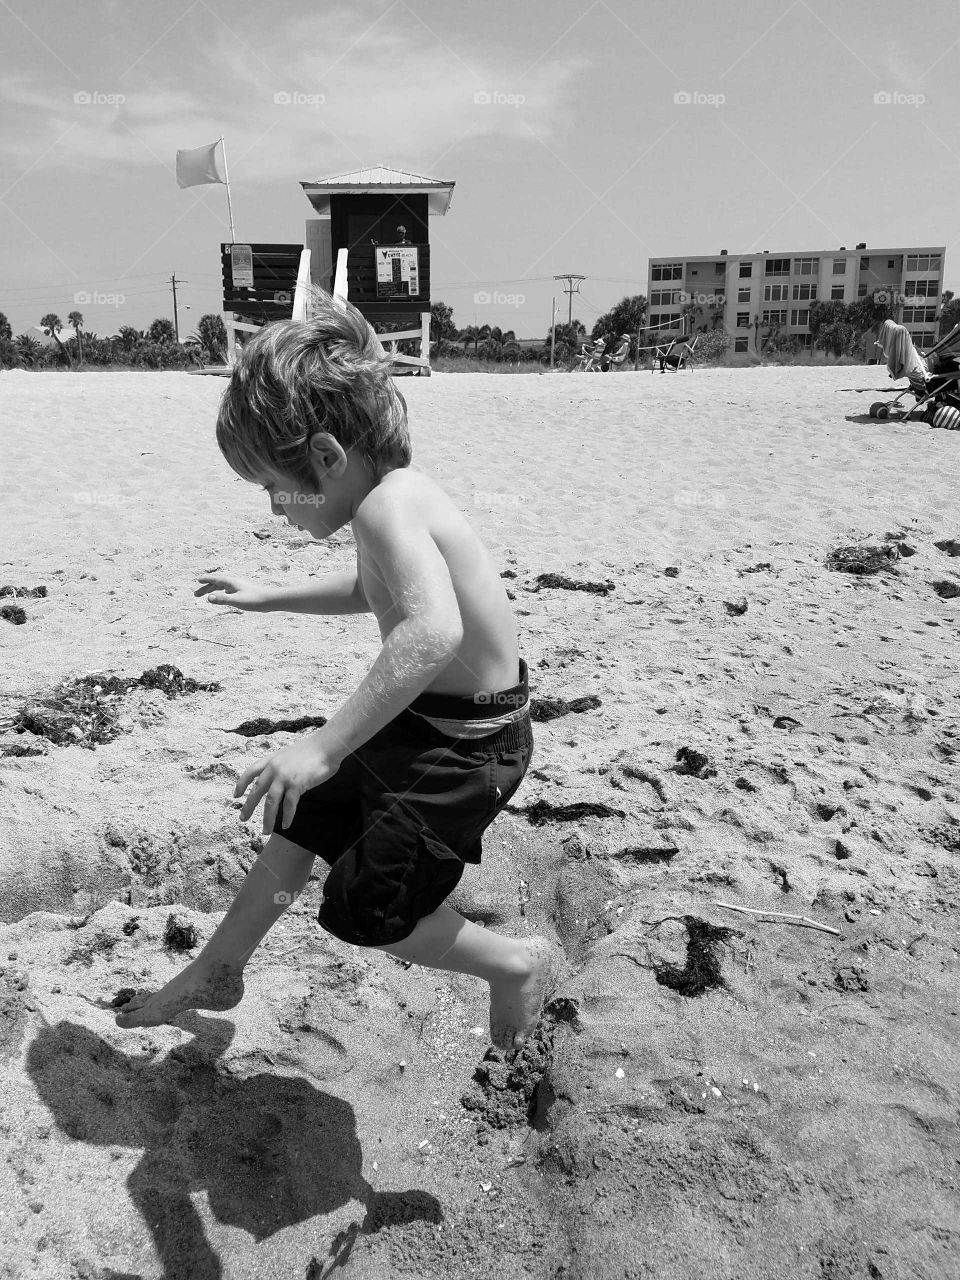 Small boy playing on sandy beach